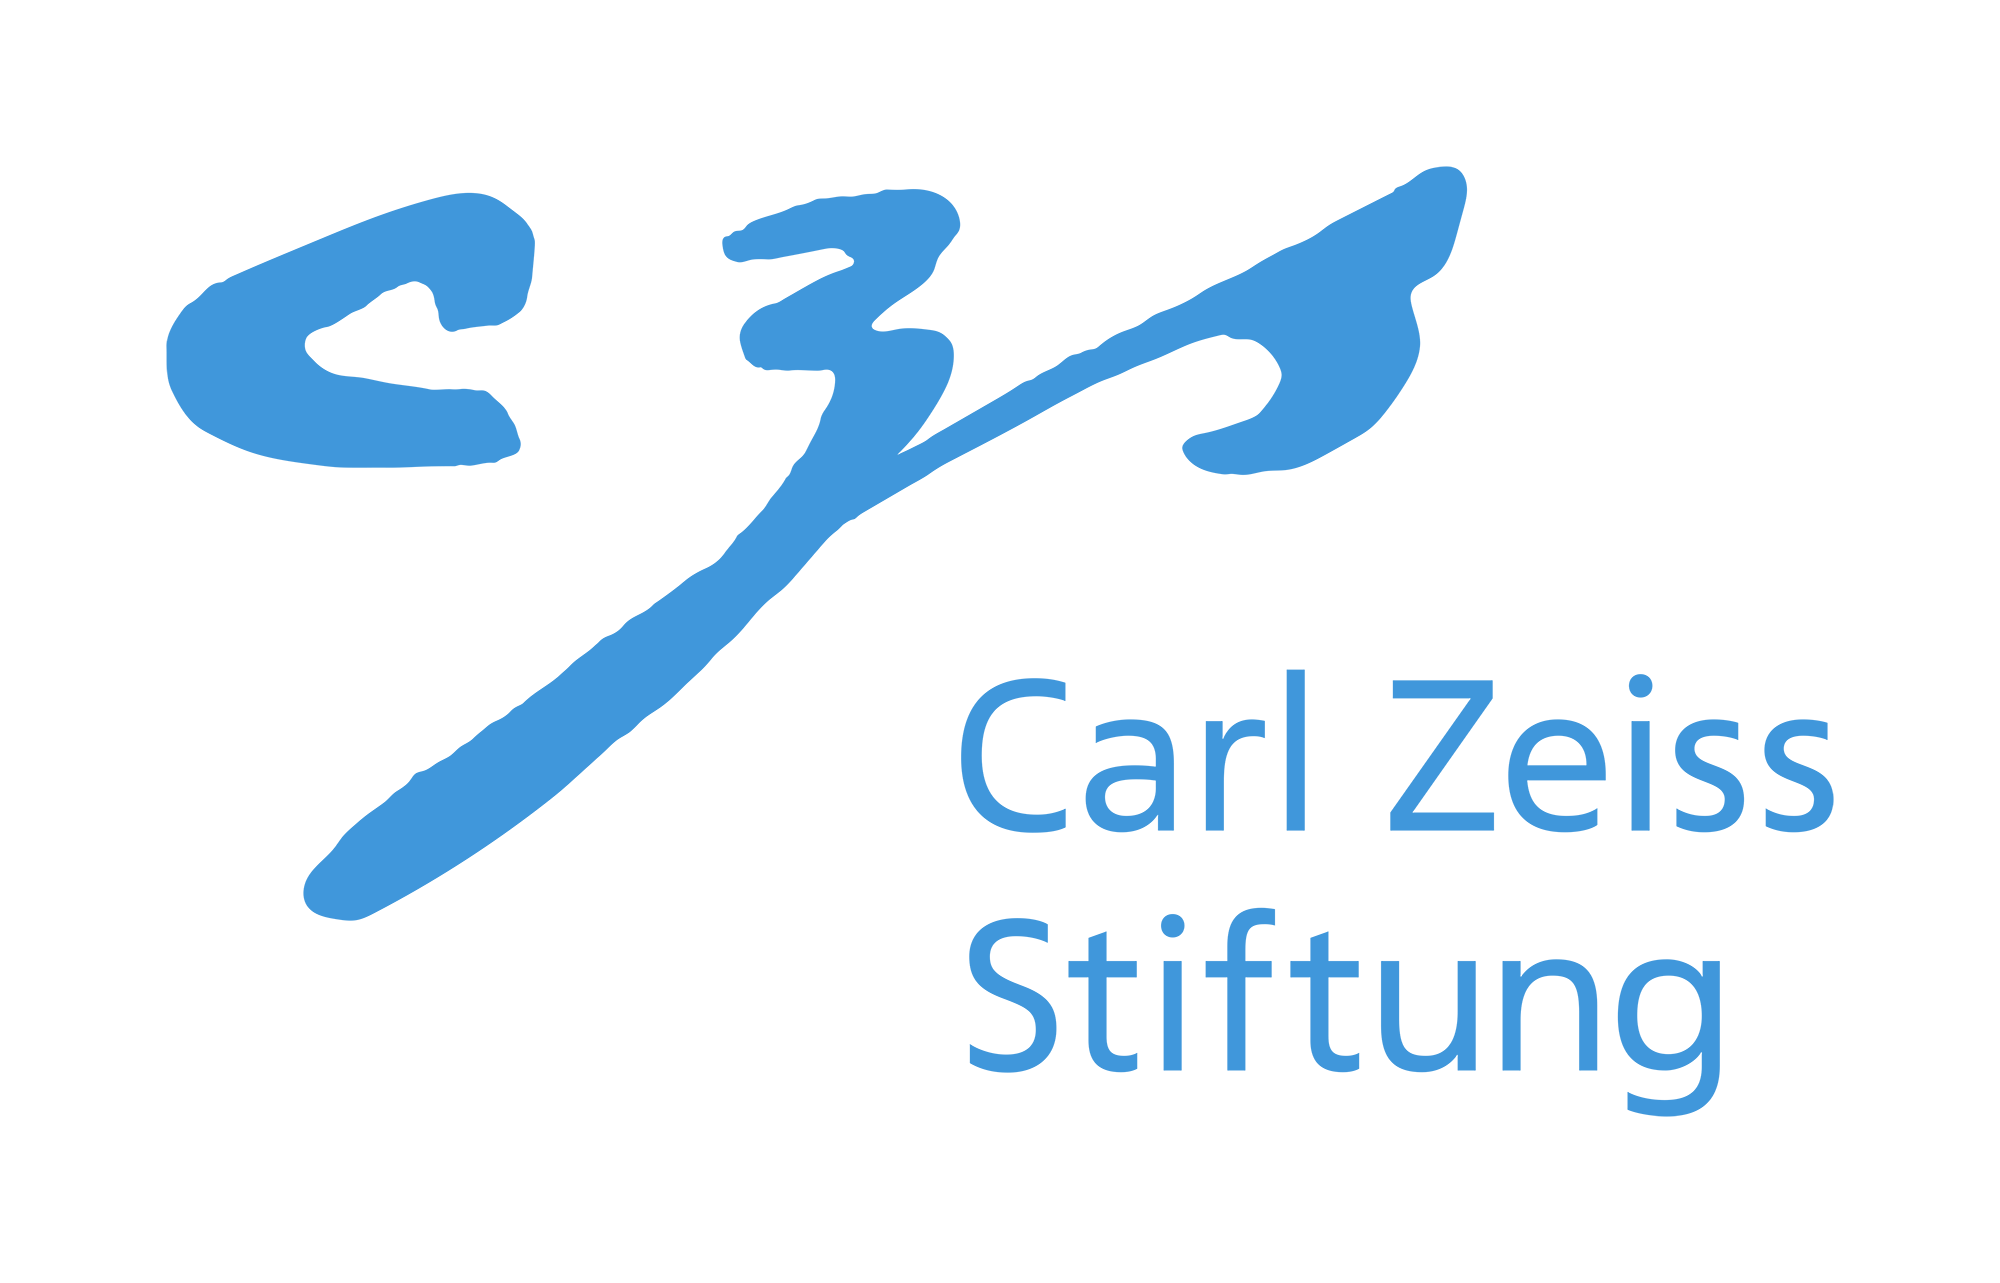 Logo Carl-Zeiss-Stiftung